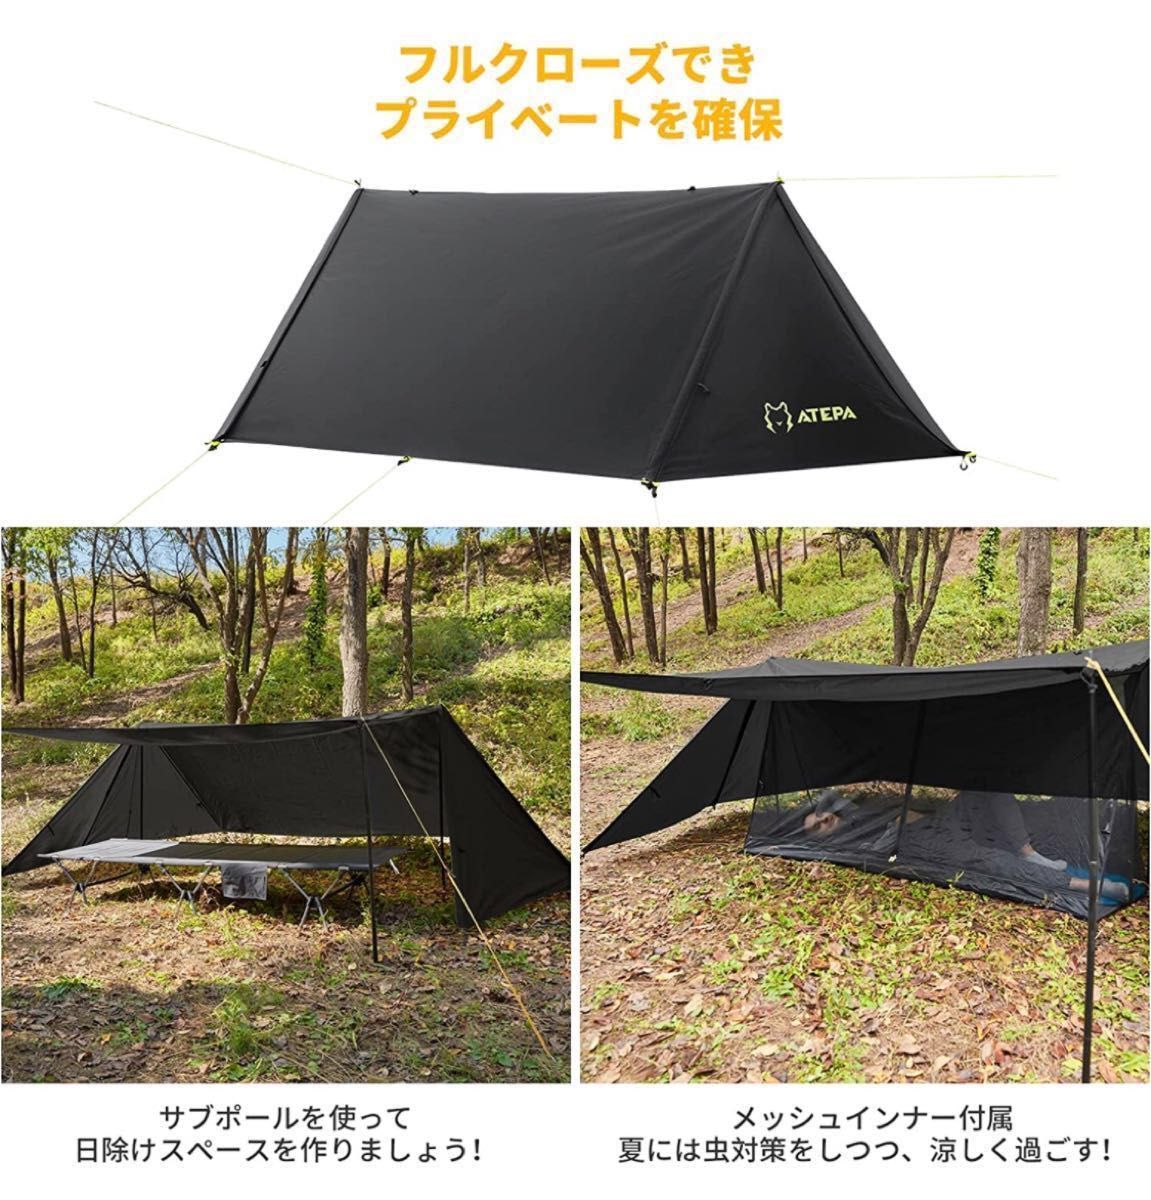 ATEPA パップテント 軍幕テント 簡易 ソロテント 1~2人用 耐水 テント キャンプ アウトドア